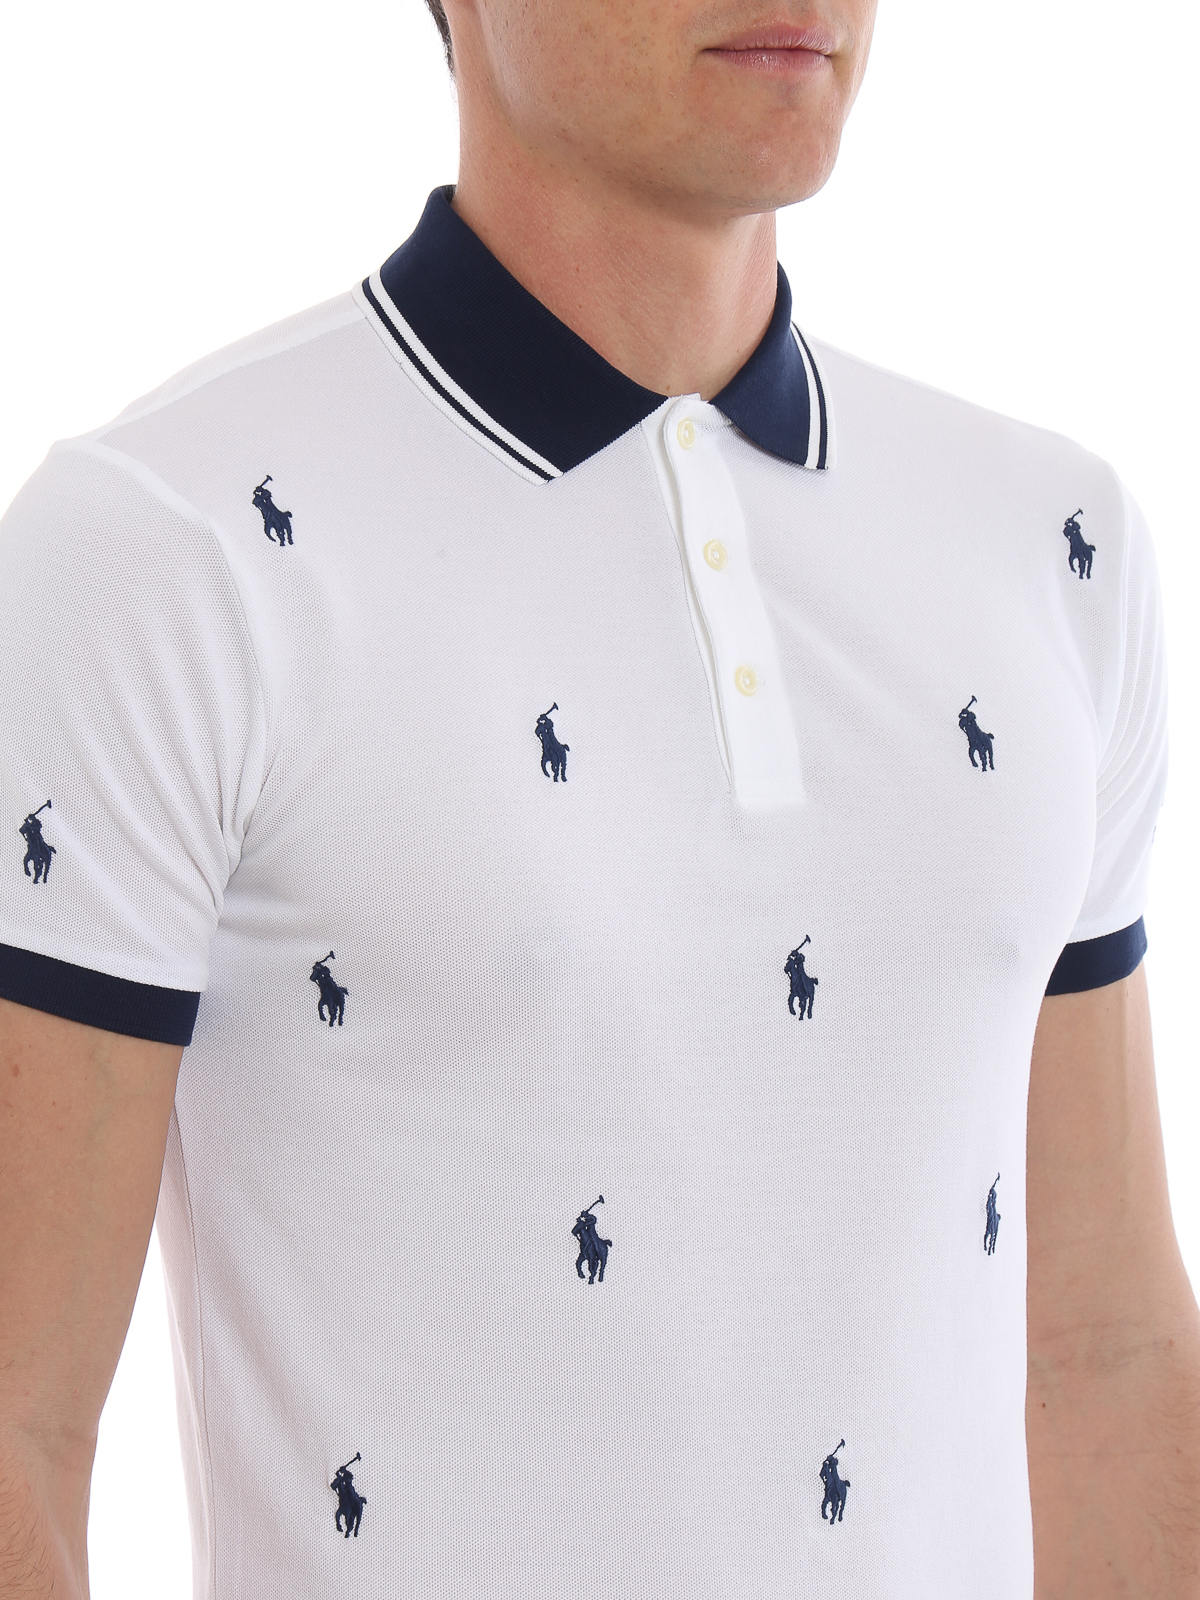 polo shirts with horse logo